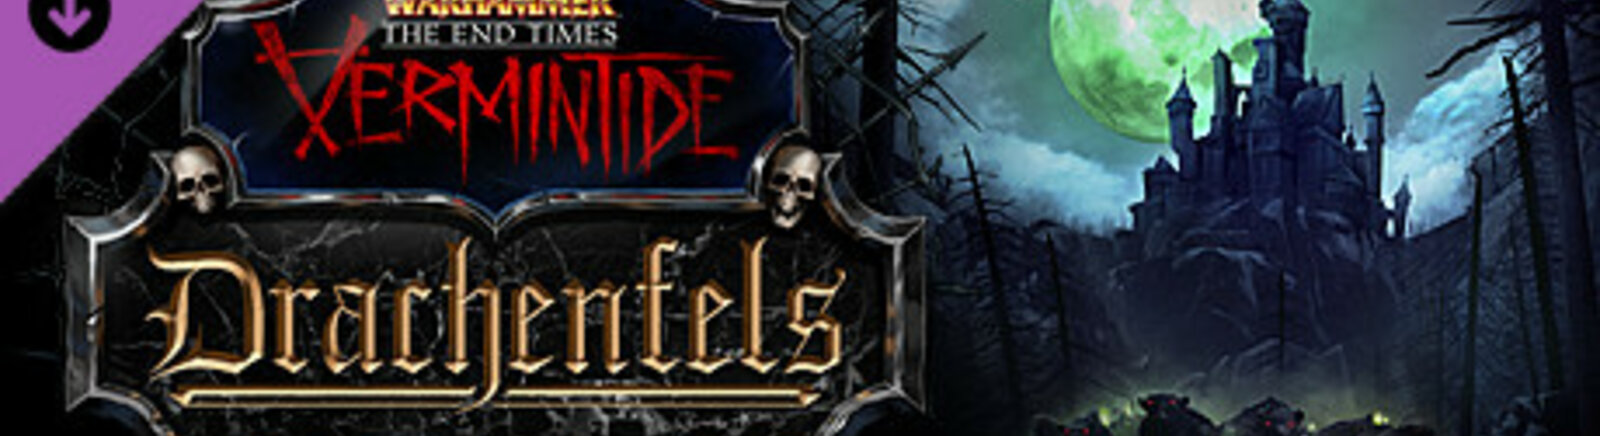 Дата выхода Warhammer: End Times - Vermintide: Drachenfels  на PC, PS4 и Xbox One в России и во всем мире